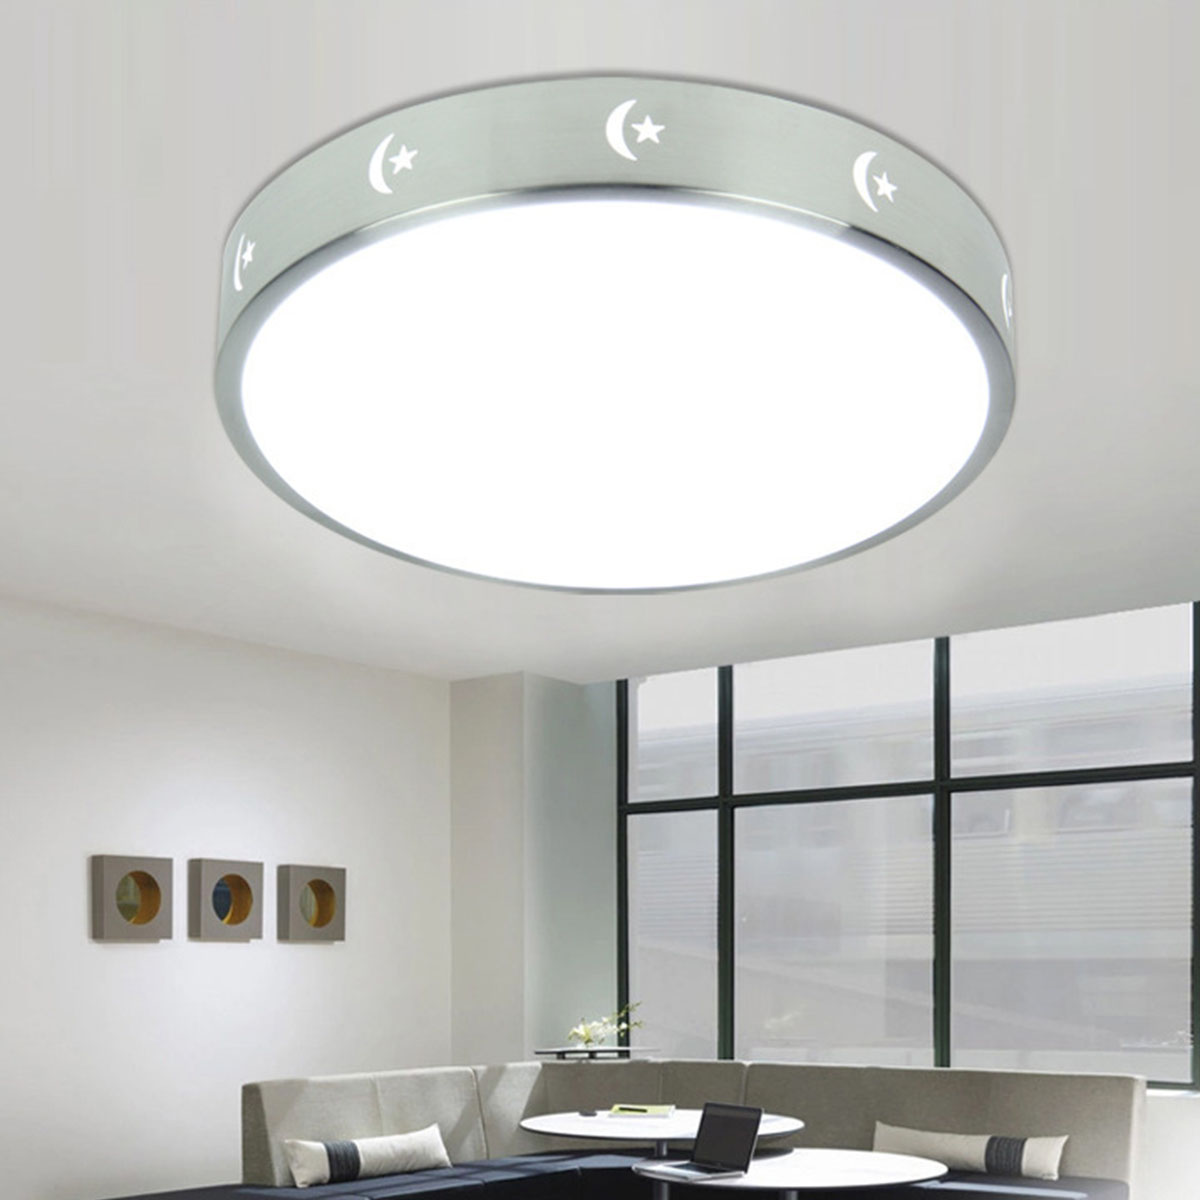 LED-Panel-Light-220V-24W-Protect-Eyes-Save-Energy-for-Home-1775150-4